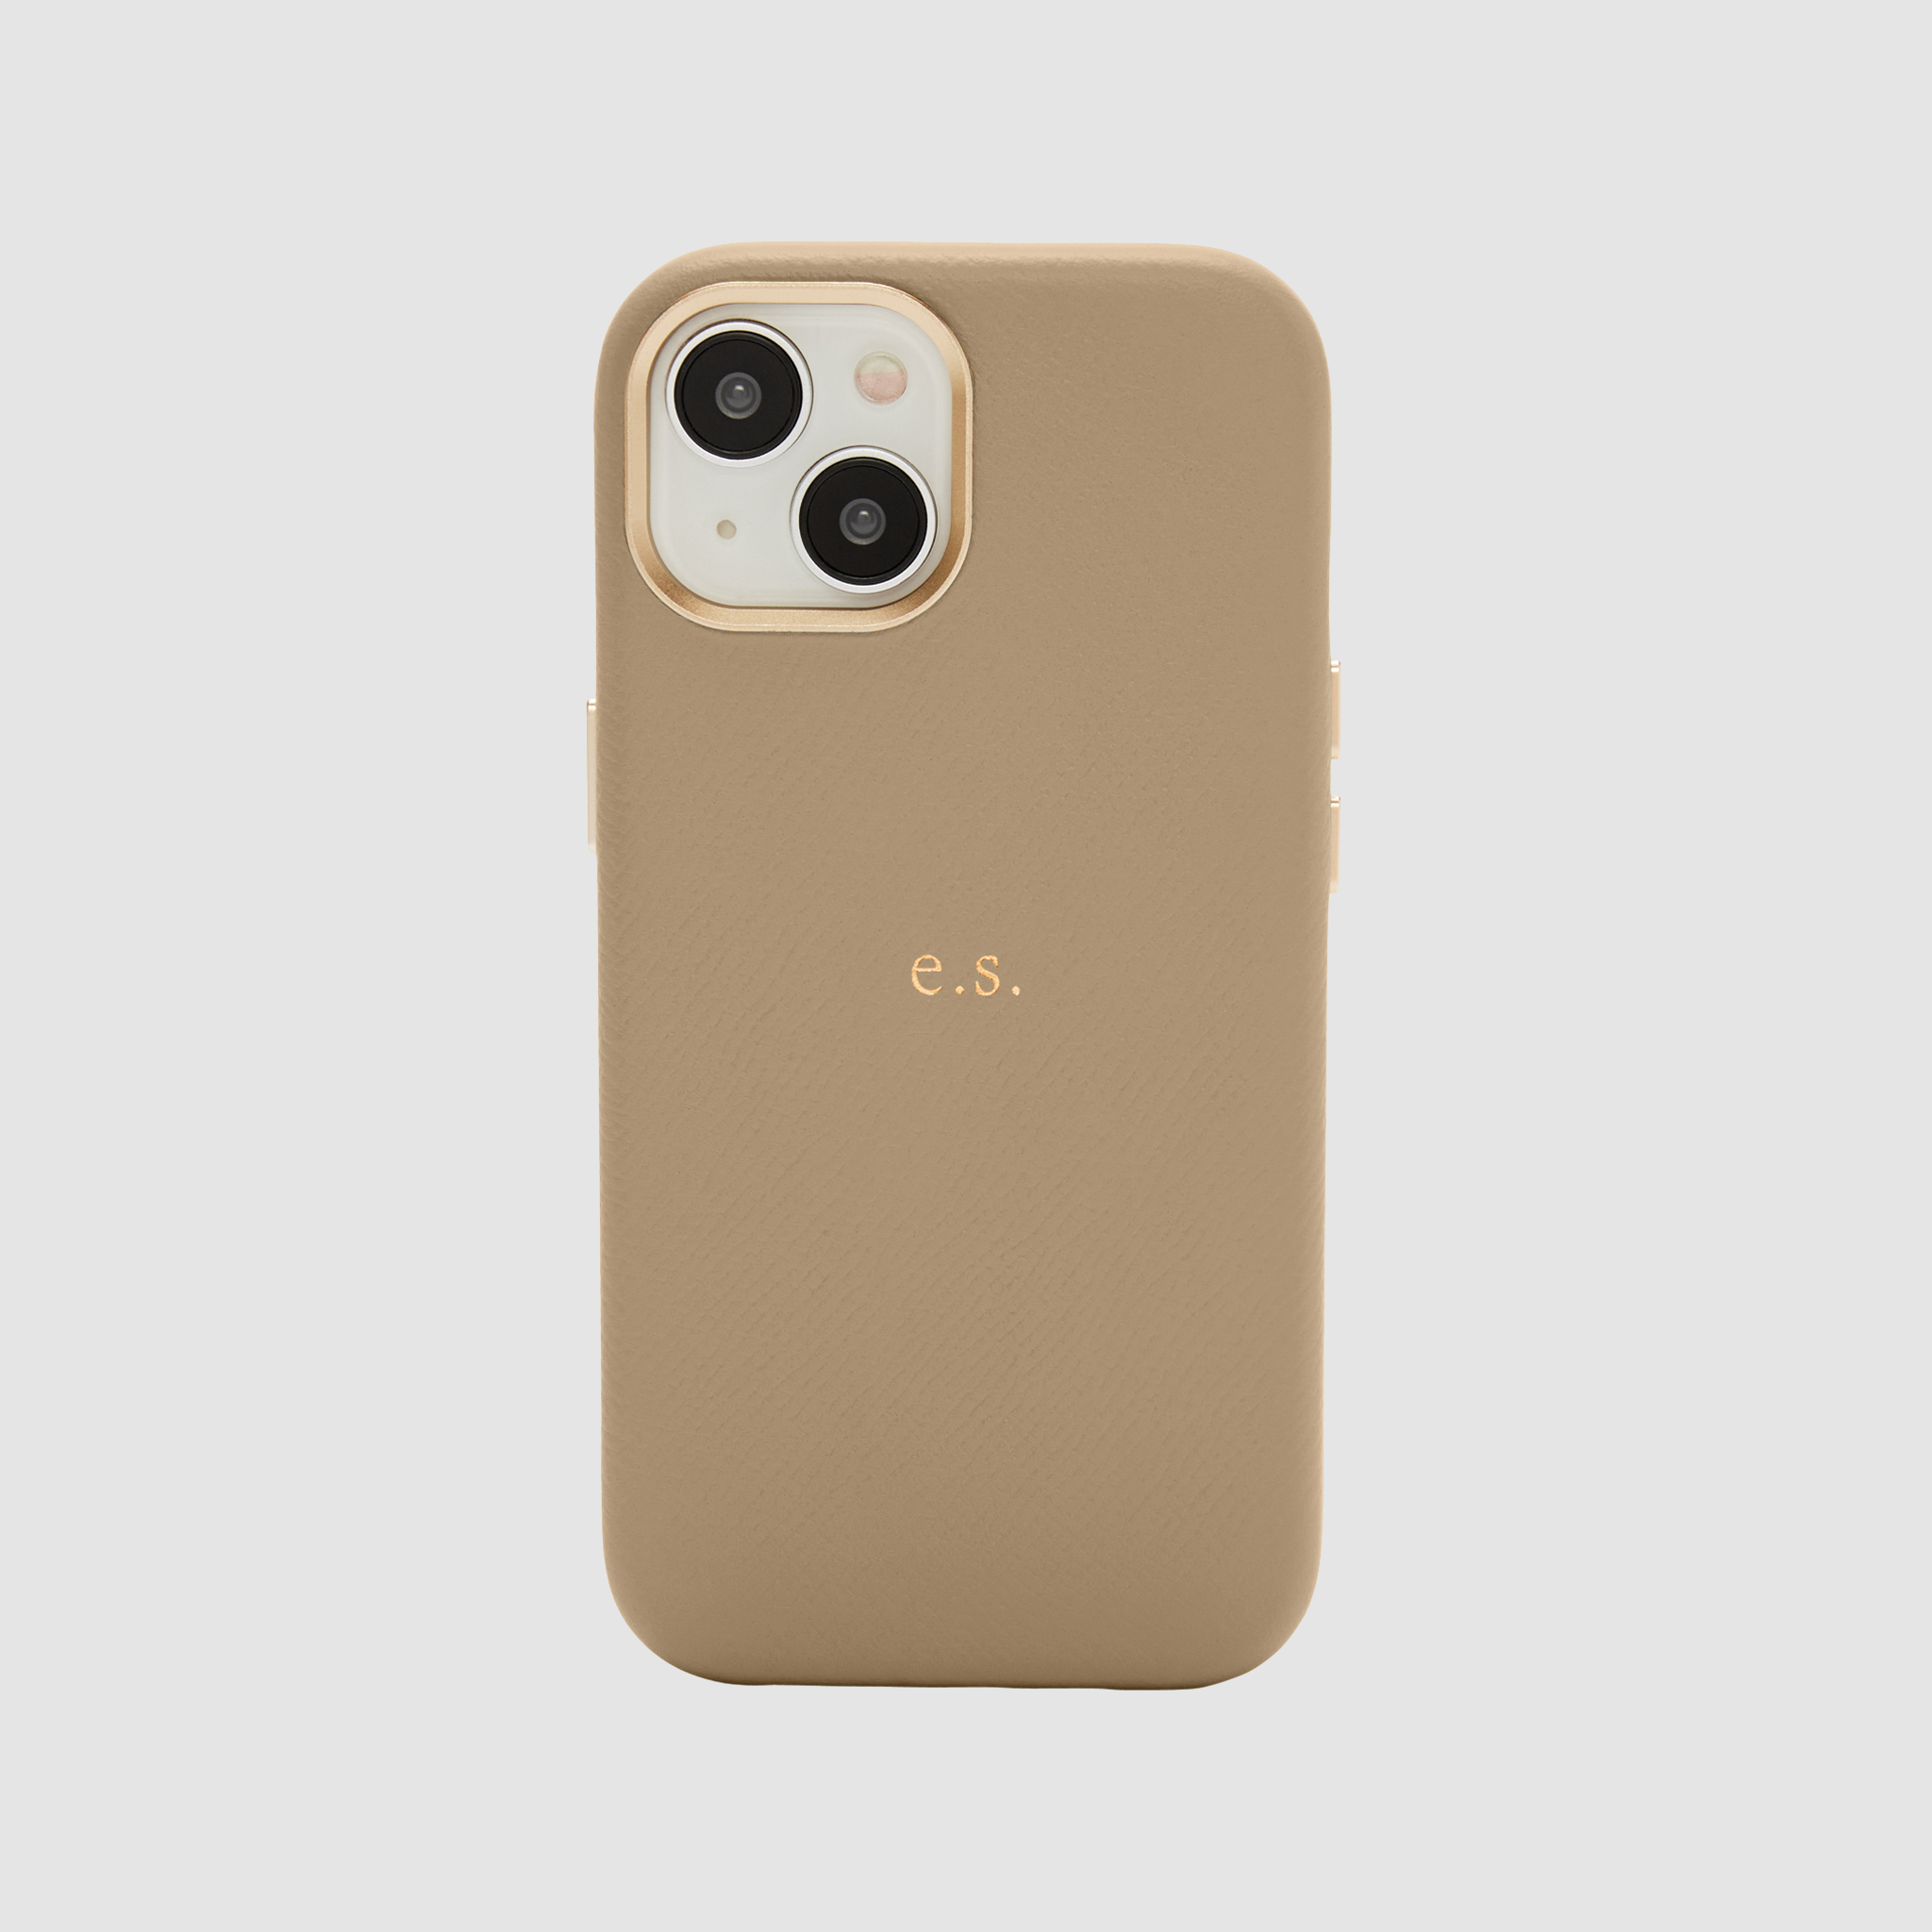 Personalised Phone Cases & Custom Phone Covers | Add Initials | tde ...